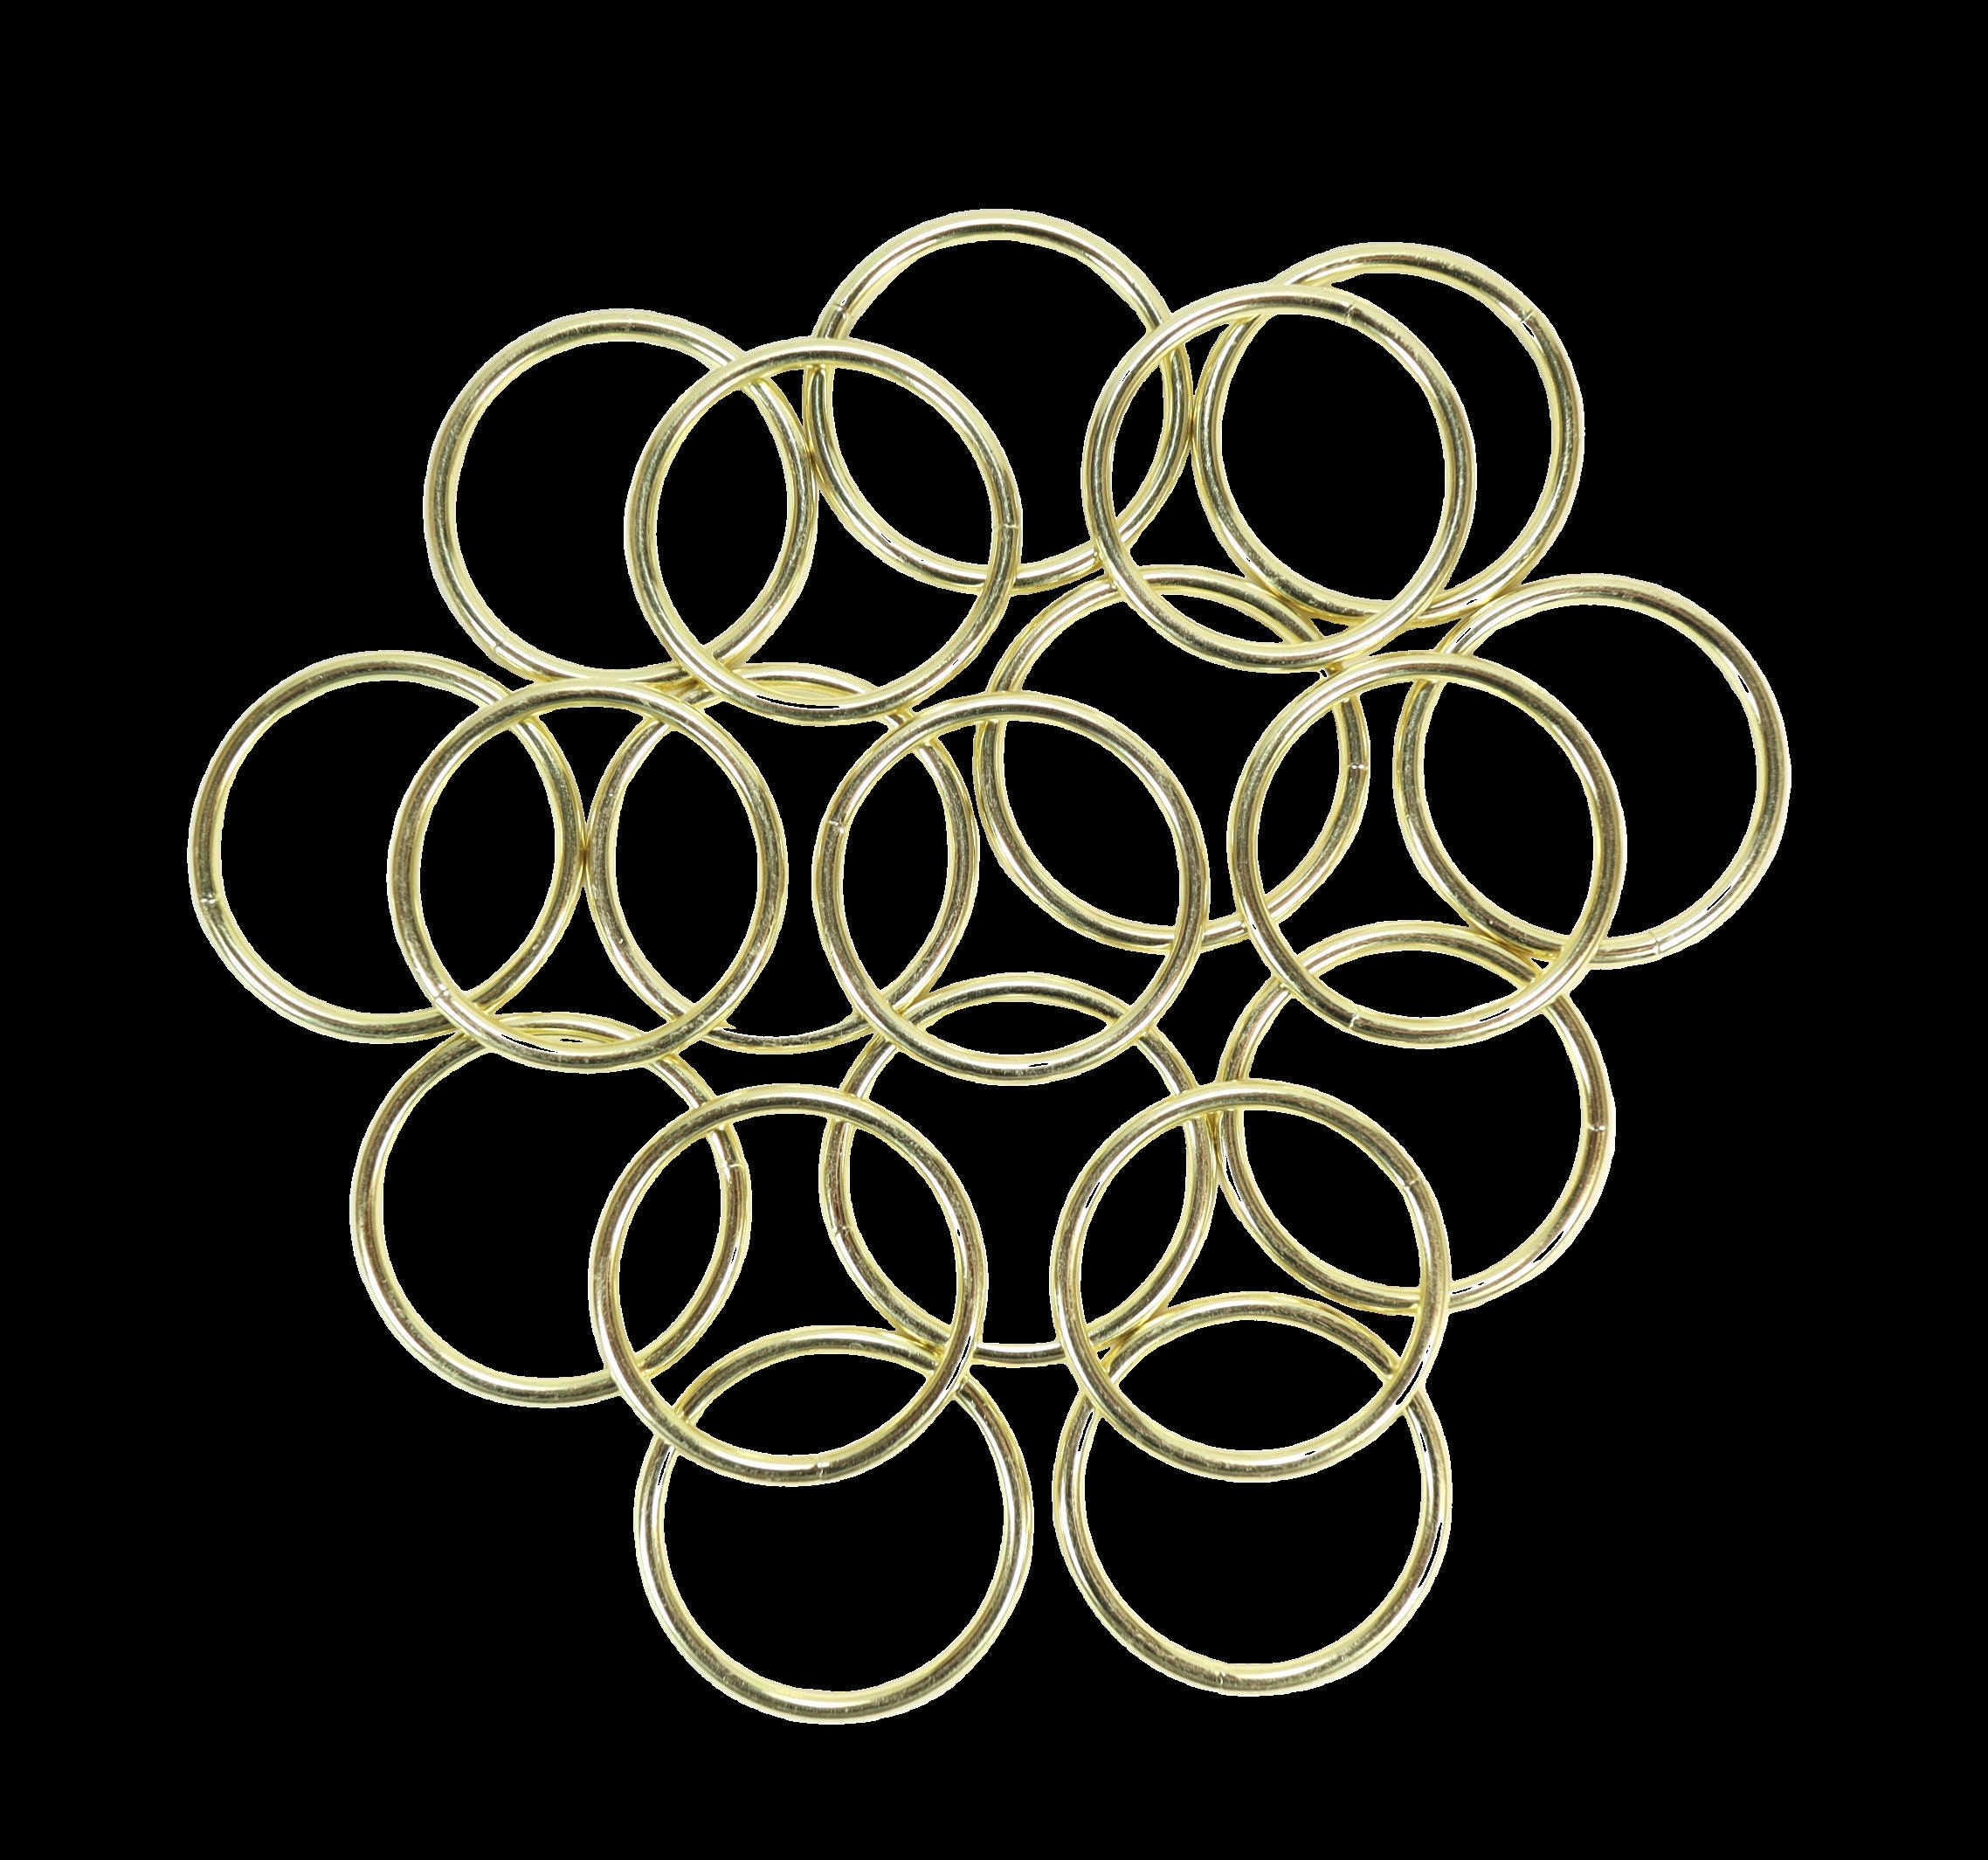 Bulk Buy: 2 2 Inch Brass Metal Craft Macrame Rings (10-pack)